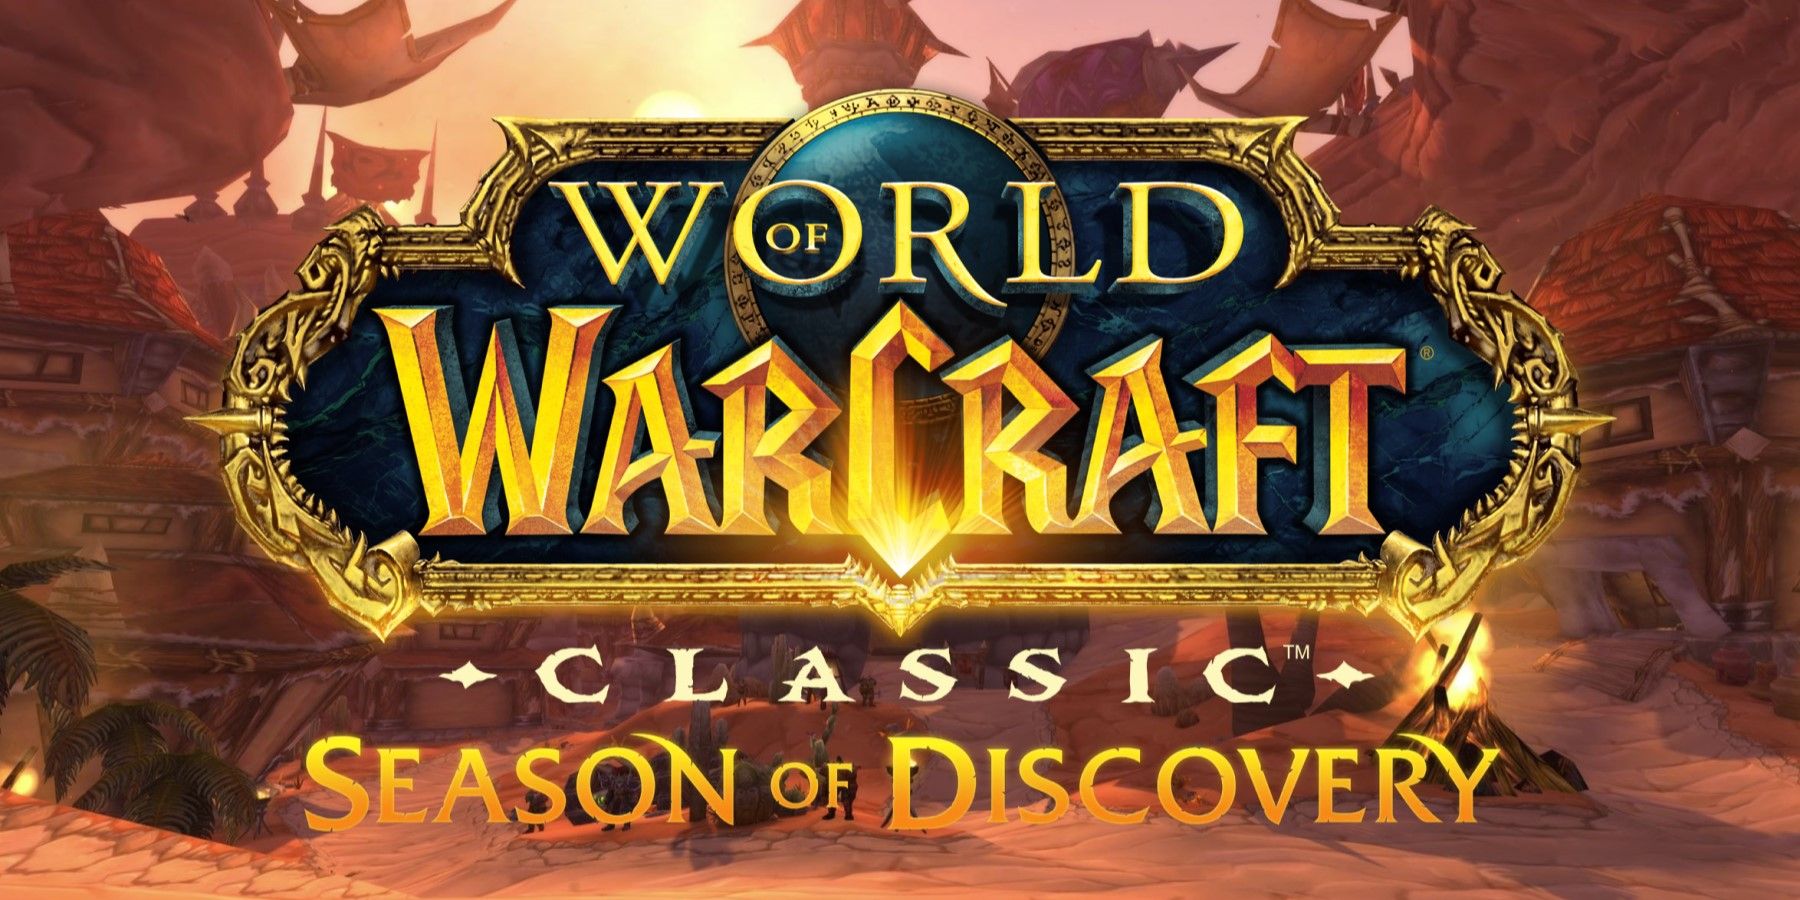 World of Warcraft Season of Discovery